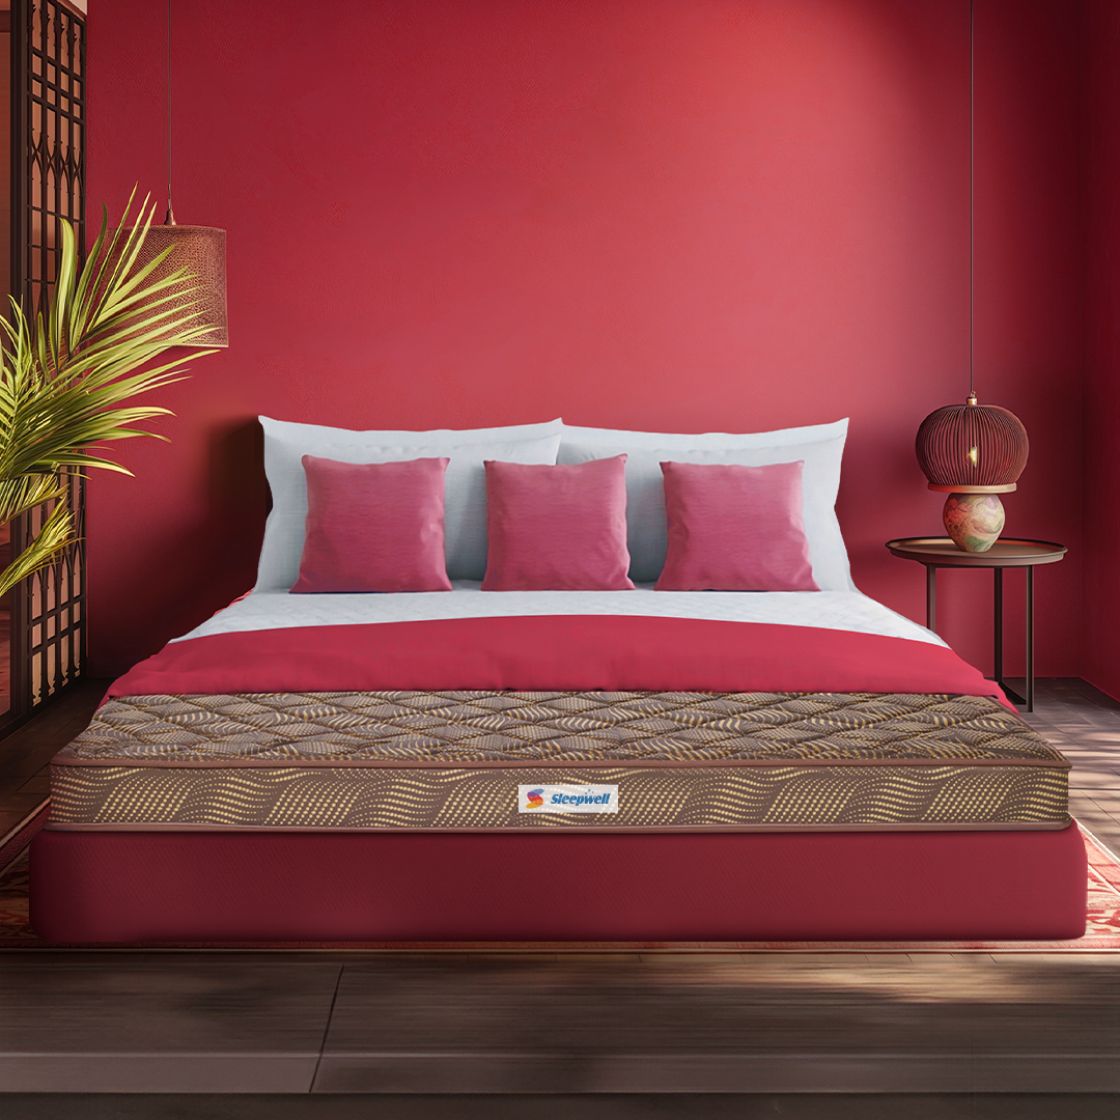 Sleepwell  Champ-Superior PU Foam | 5-inch Double Bed Size | Medium Firm | Anti Sag Tech Mattress (Brown, 78x60x5)